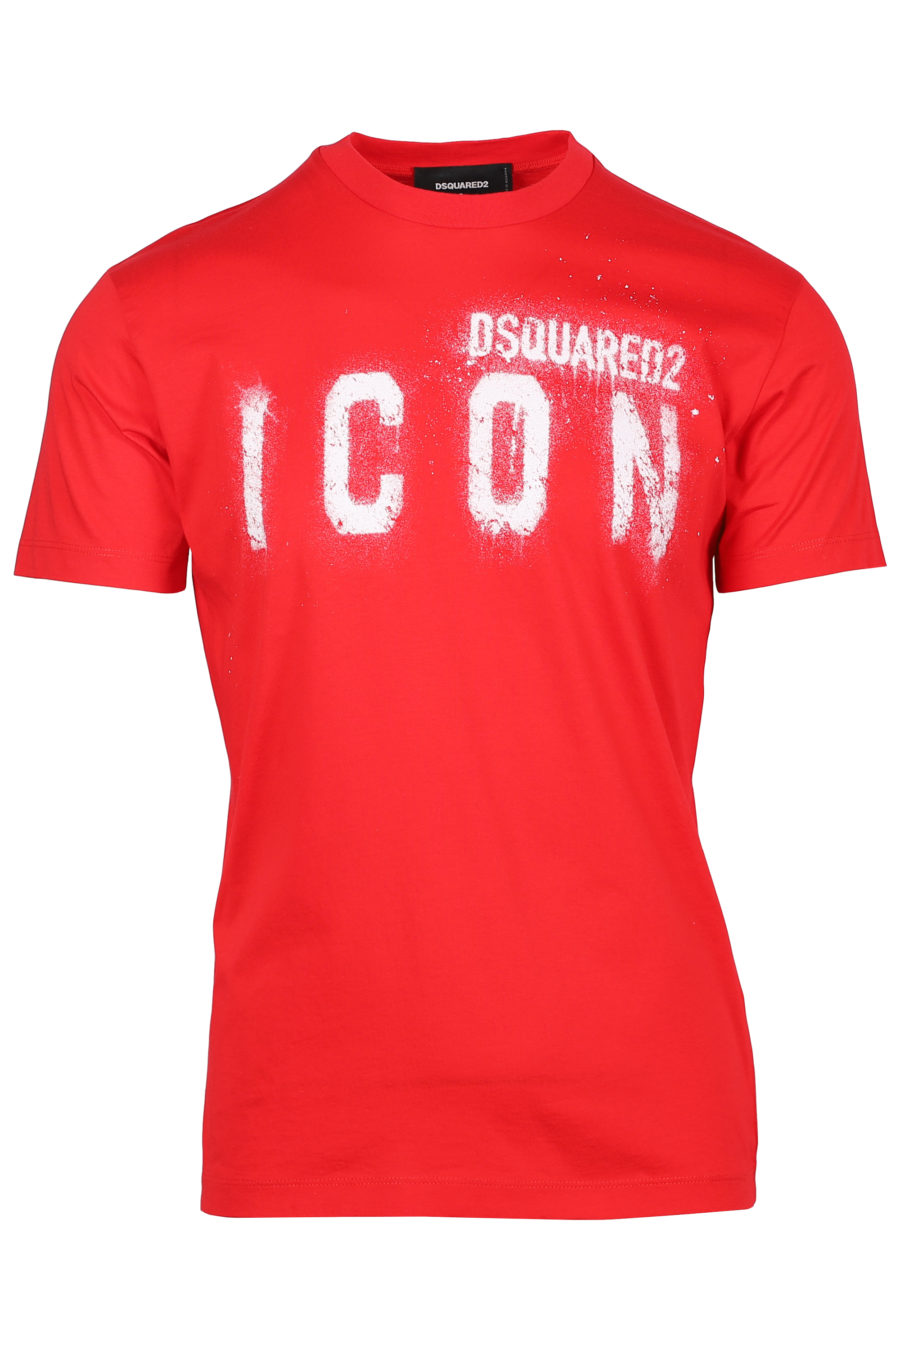 Camiseta roja con logo "Icon Spray" - IMG 2339